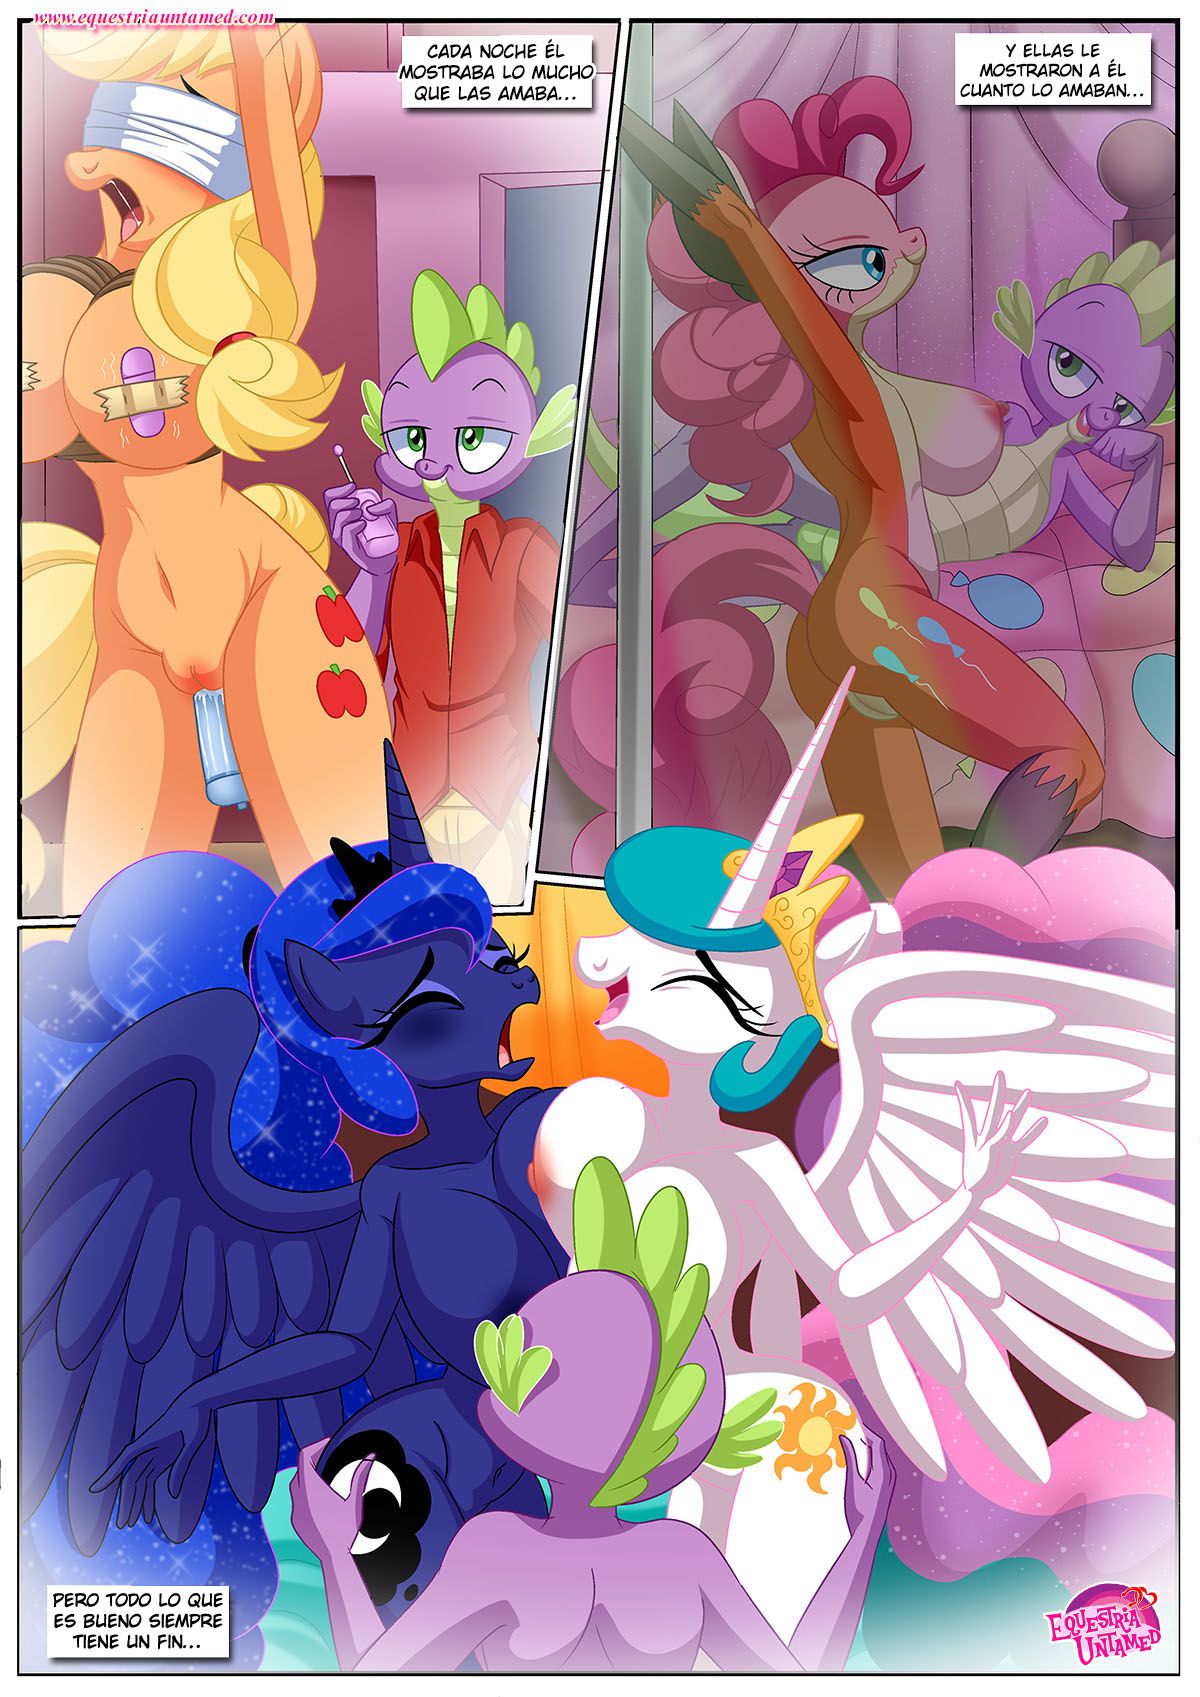 [Palcomix] La Fantasía Definitiva de Spike O El Harem del Rey Dragón | (My Little Pony: Friendship is Magic) (Spanish) [kalock] [En Progreso] 4